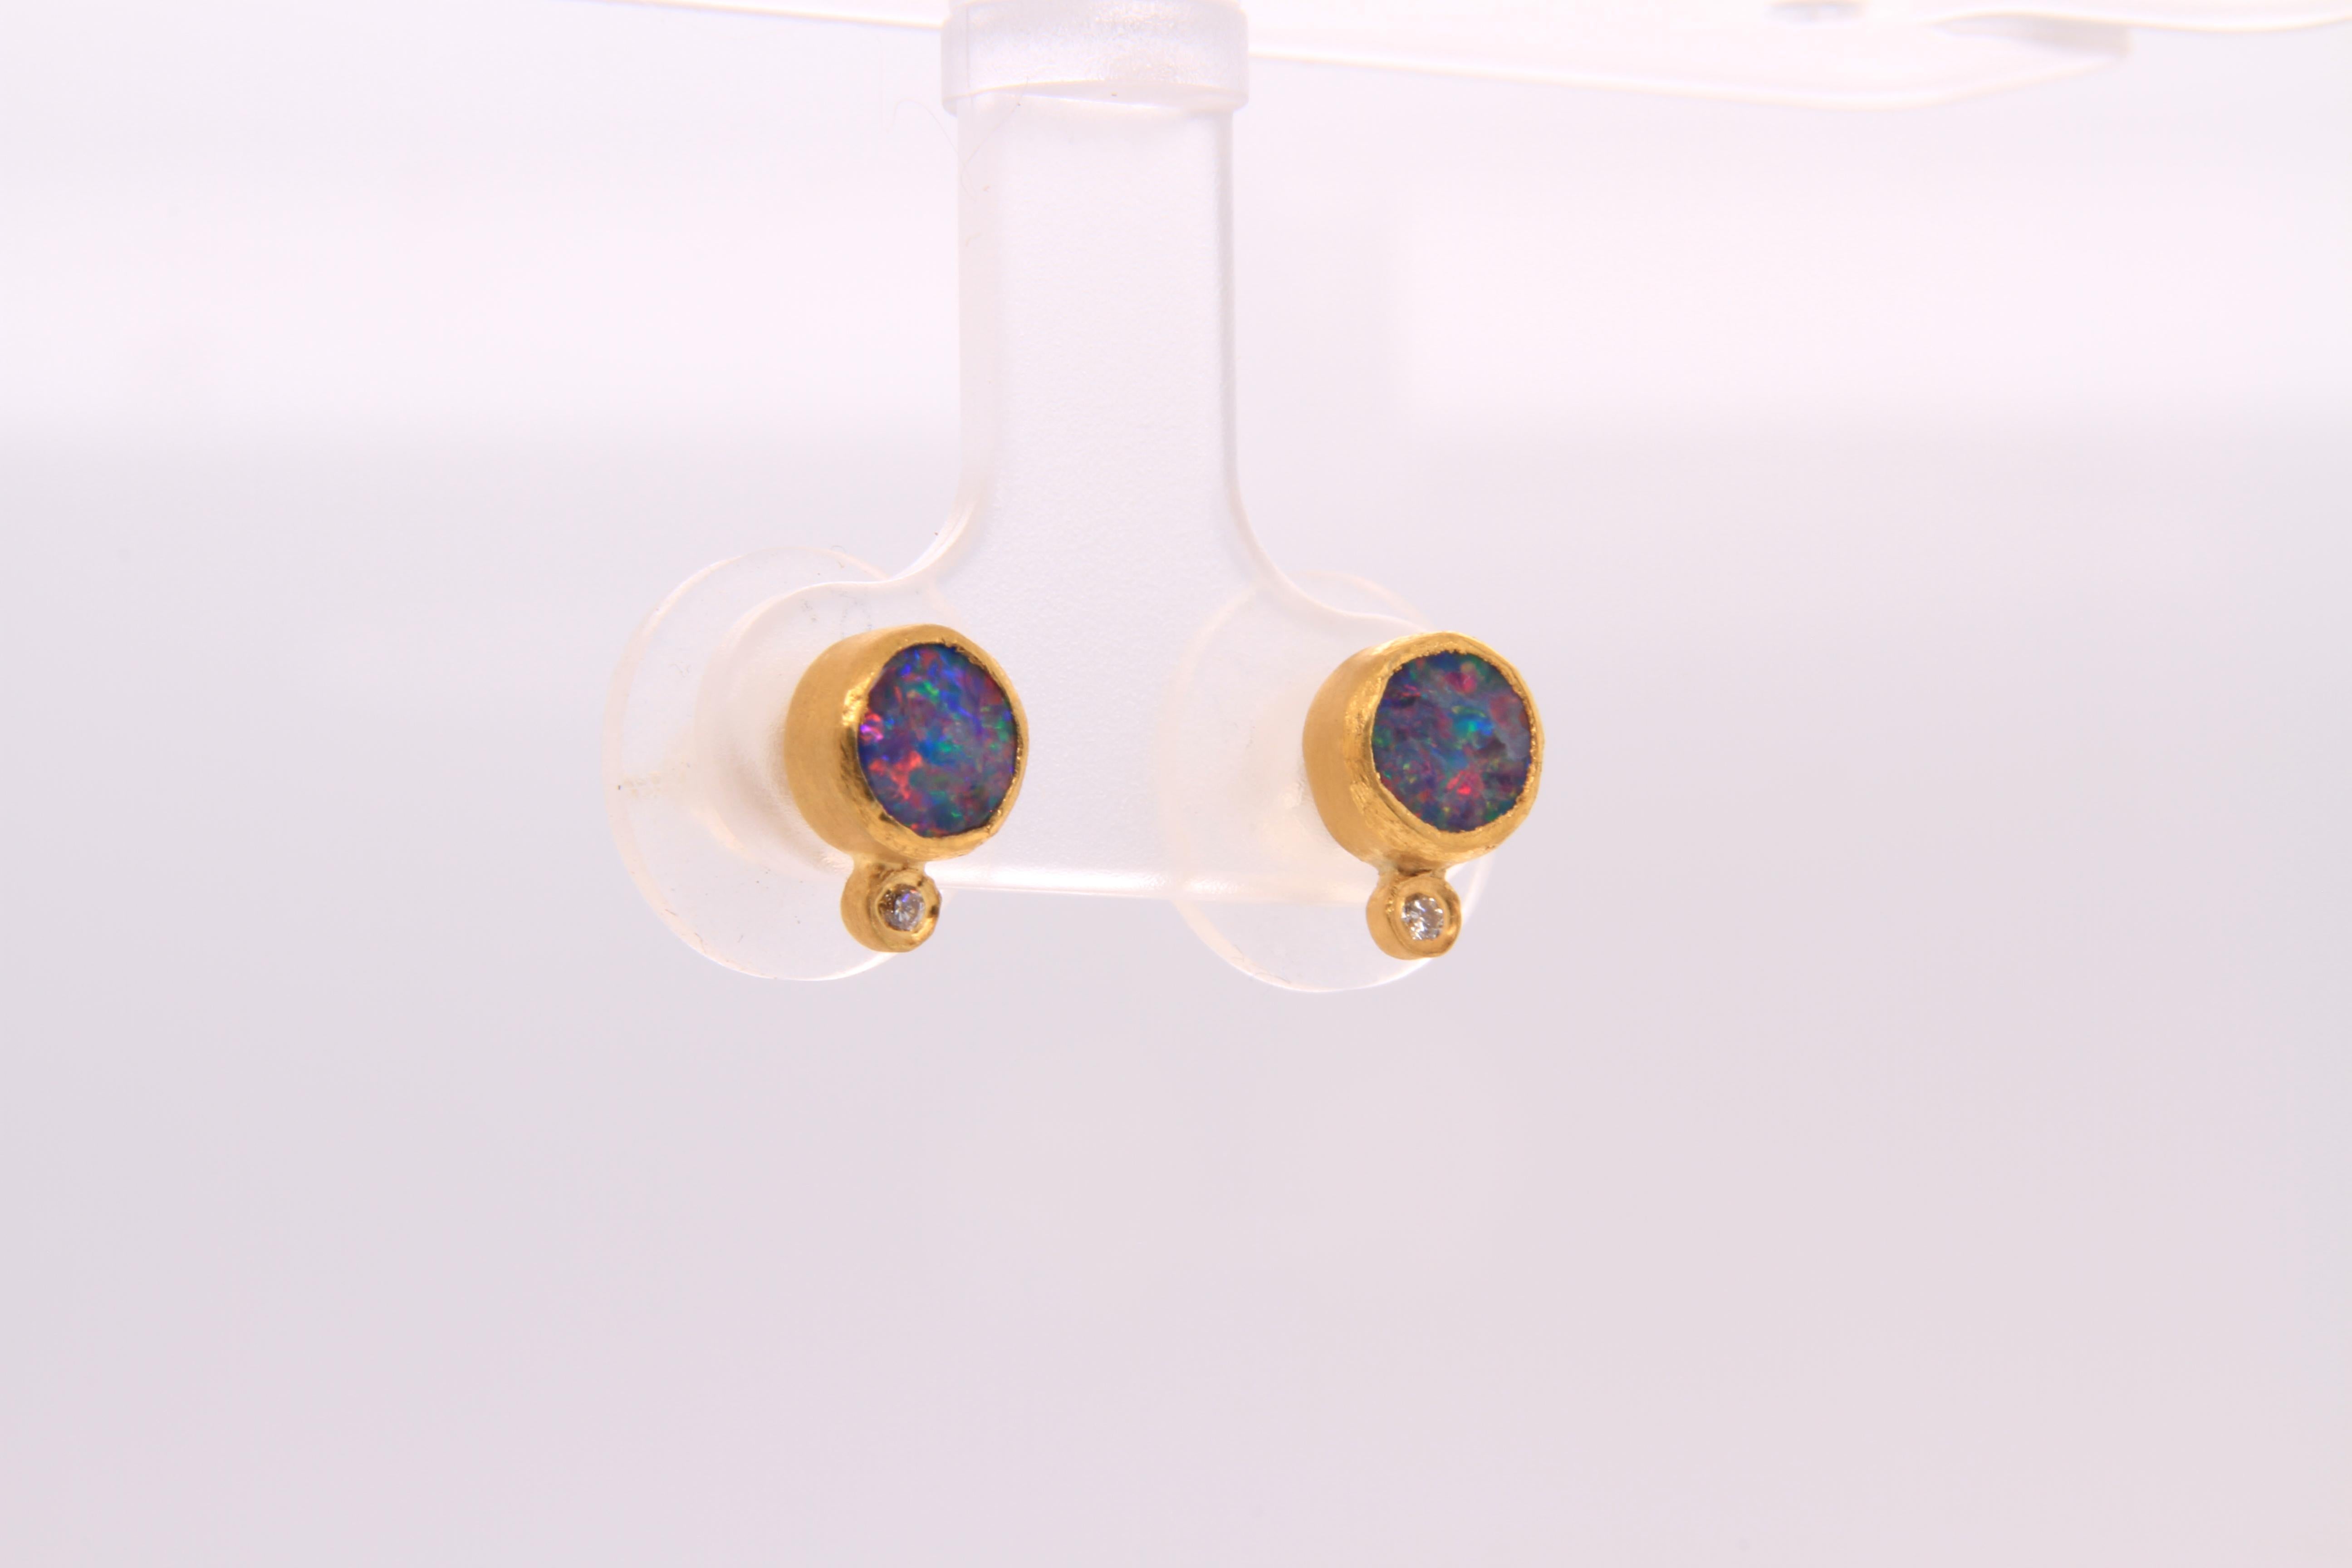 Bright Rainbow Opal Stud Earrings with Diamonds, Solid 24K by Kurtulan 4